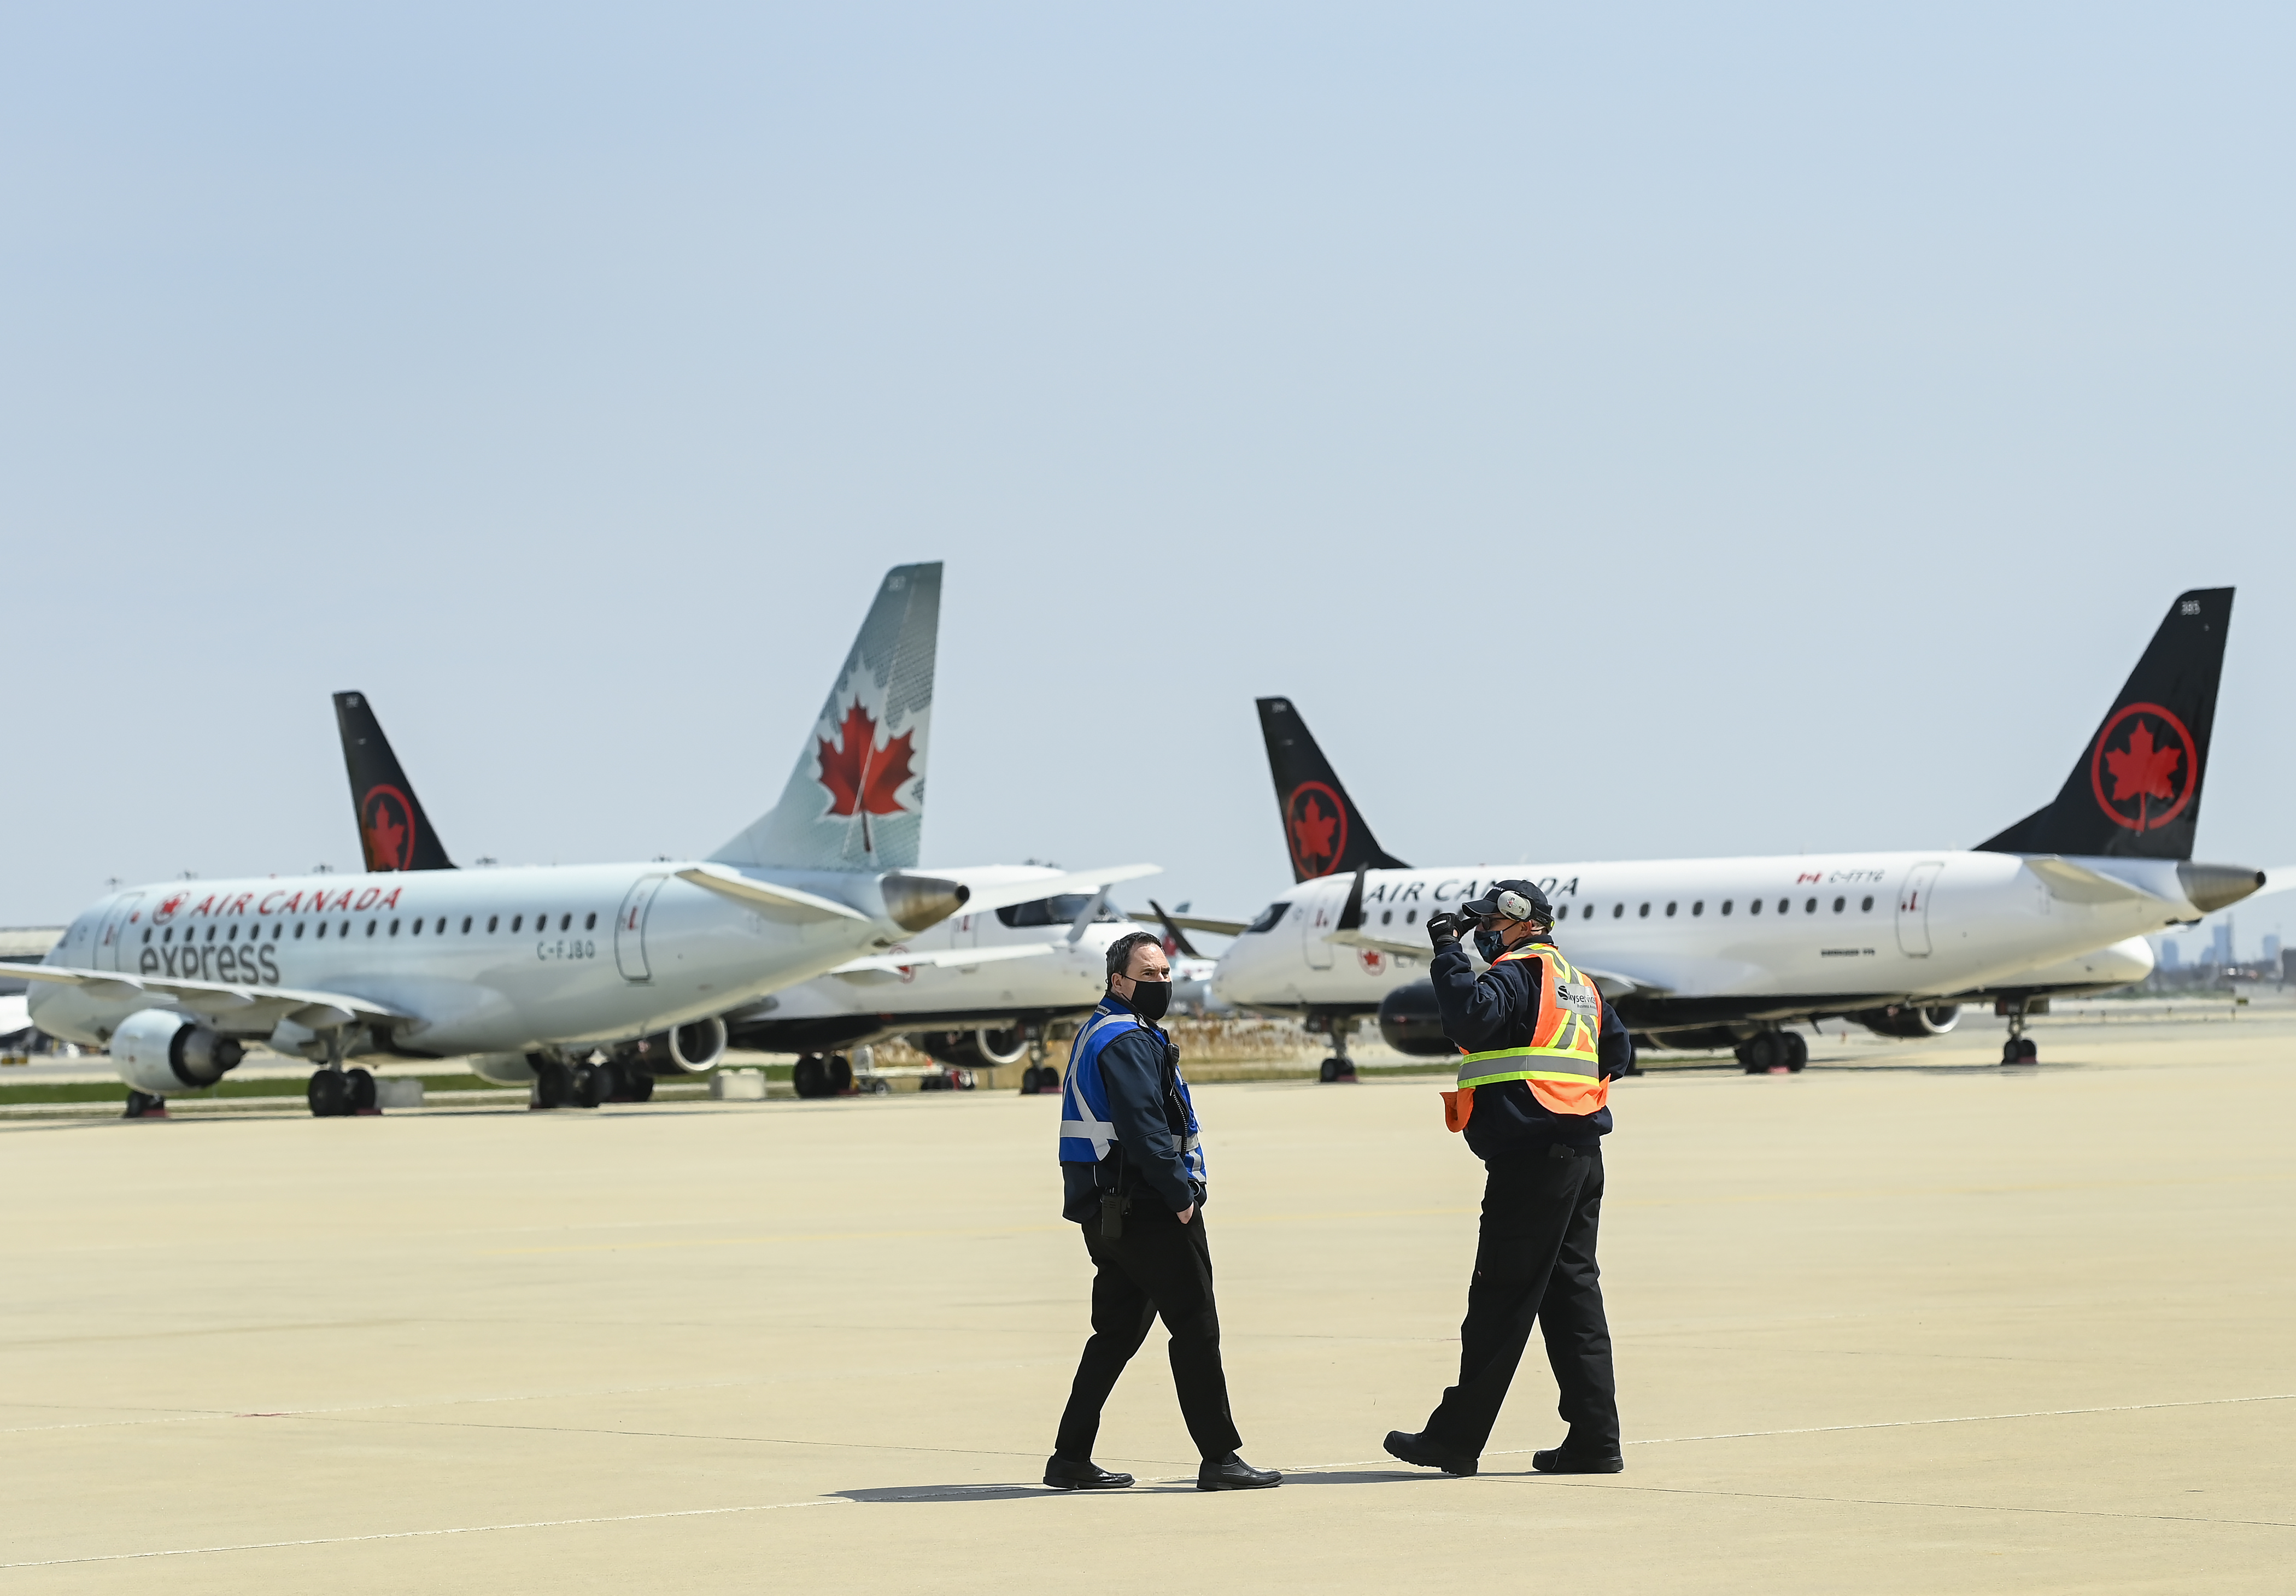 Food service strike: Air Canada, WestJet refine options at Toronto Pearson